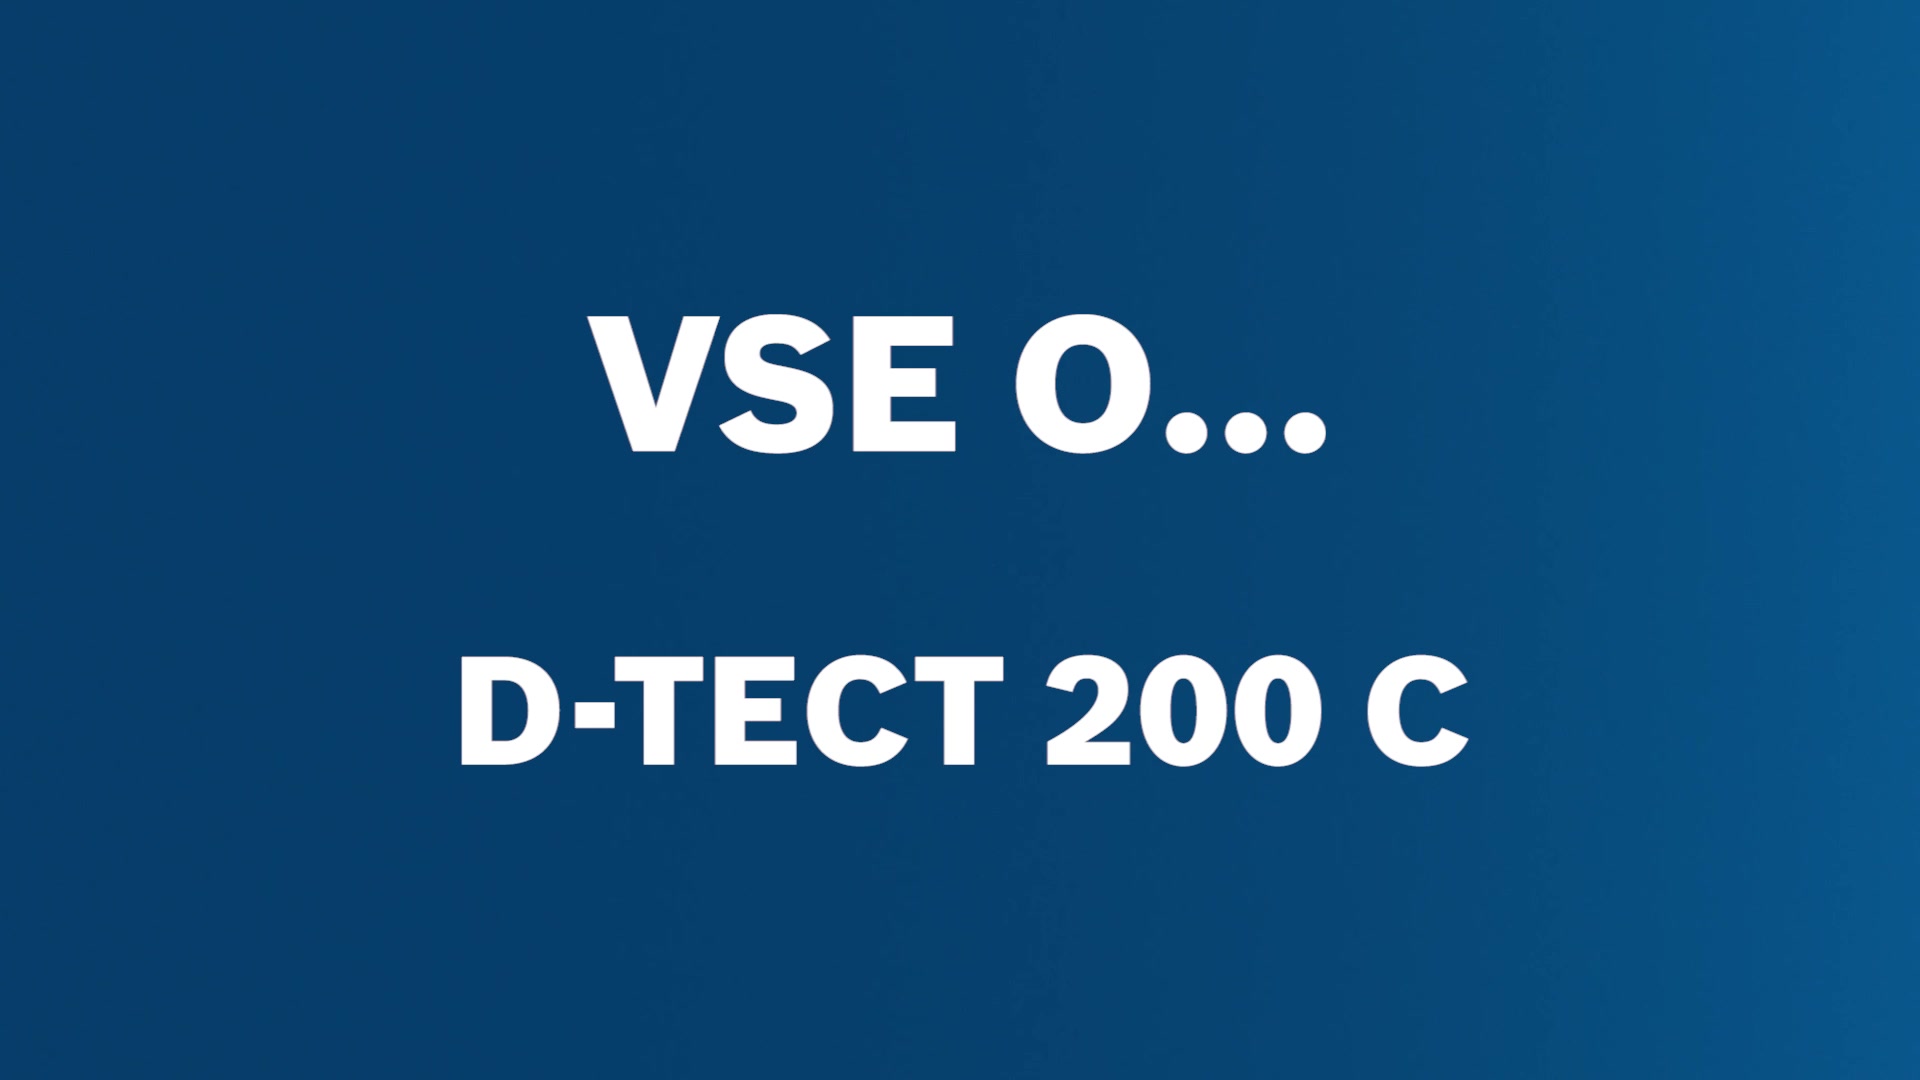 Digitalni detektor D-tect 200 C